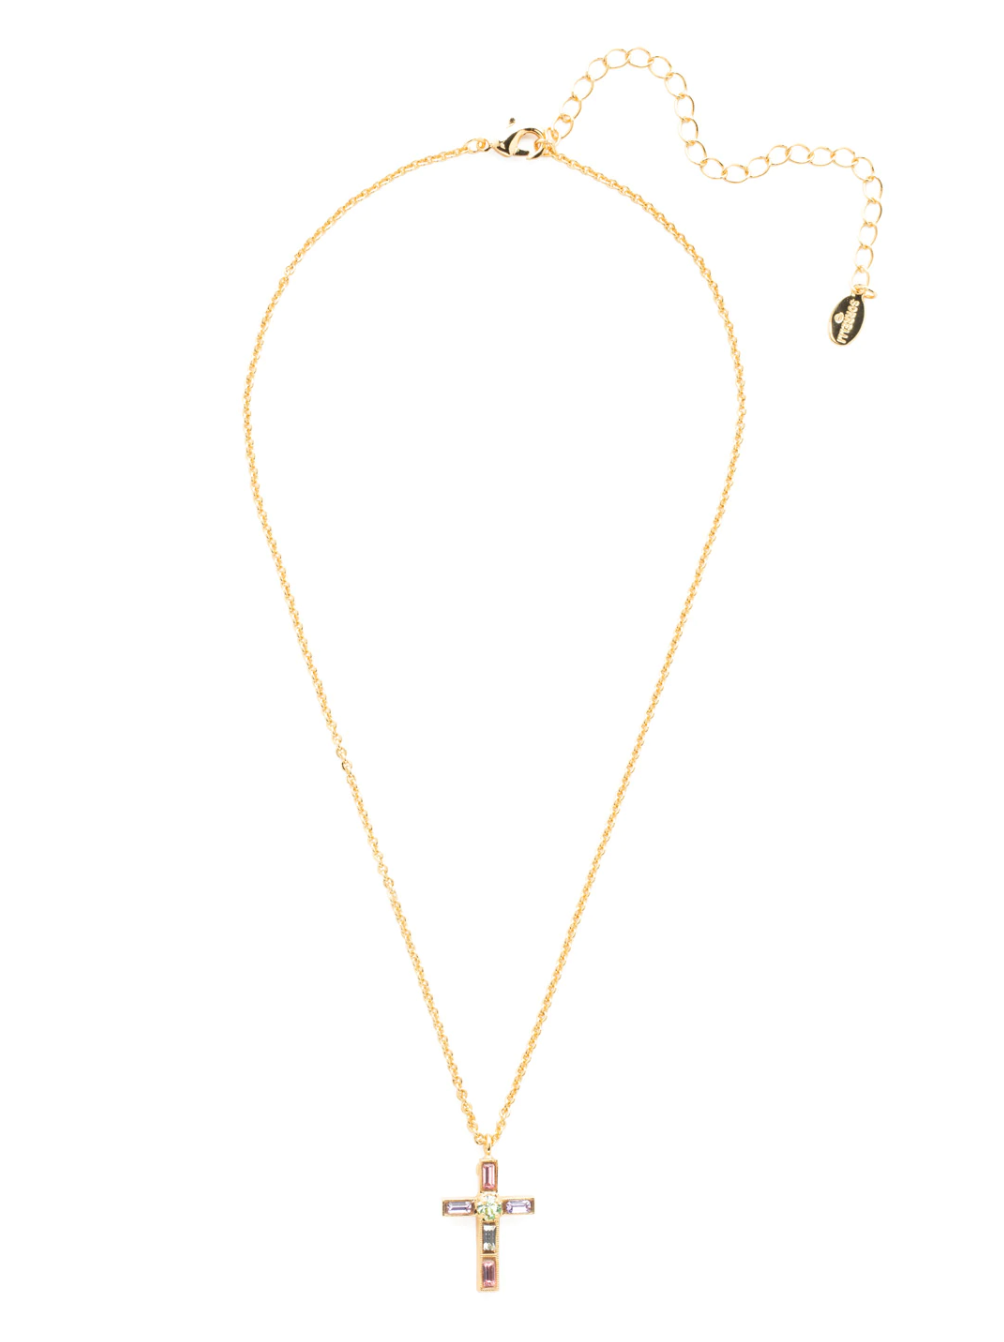 Teagan Cross Pendant Necklace - Bright Gold